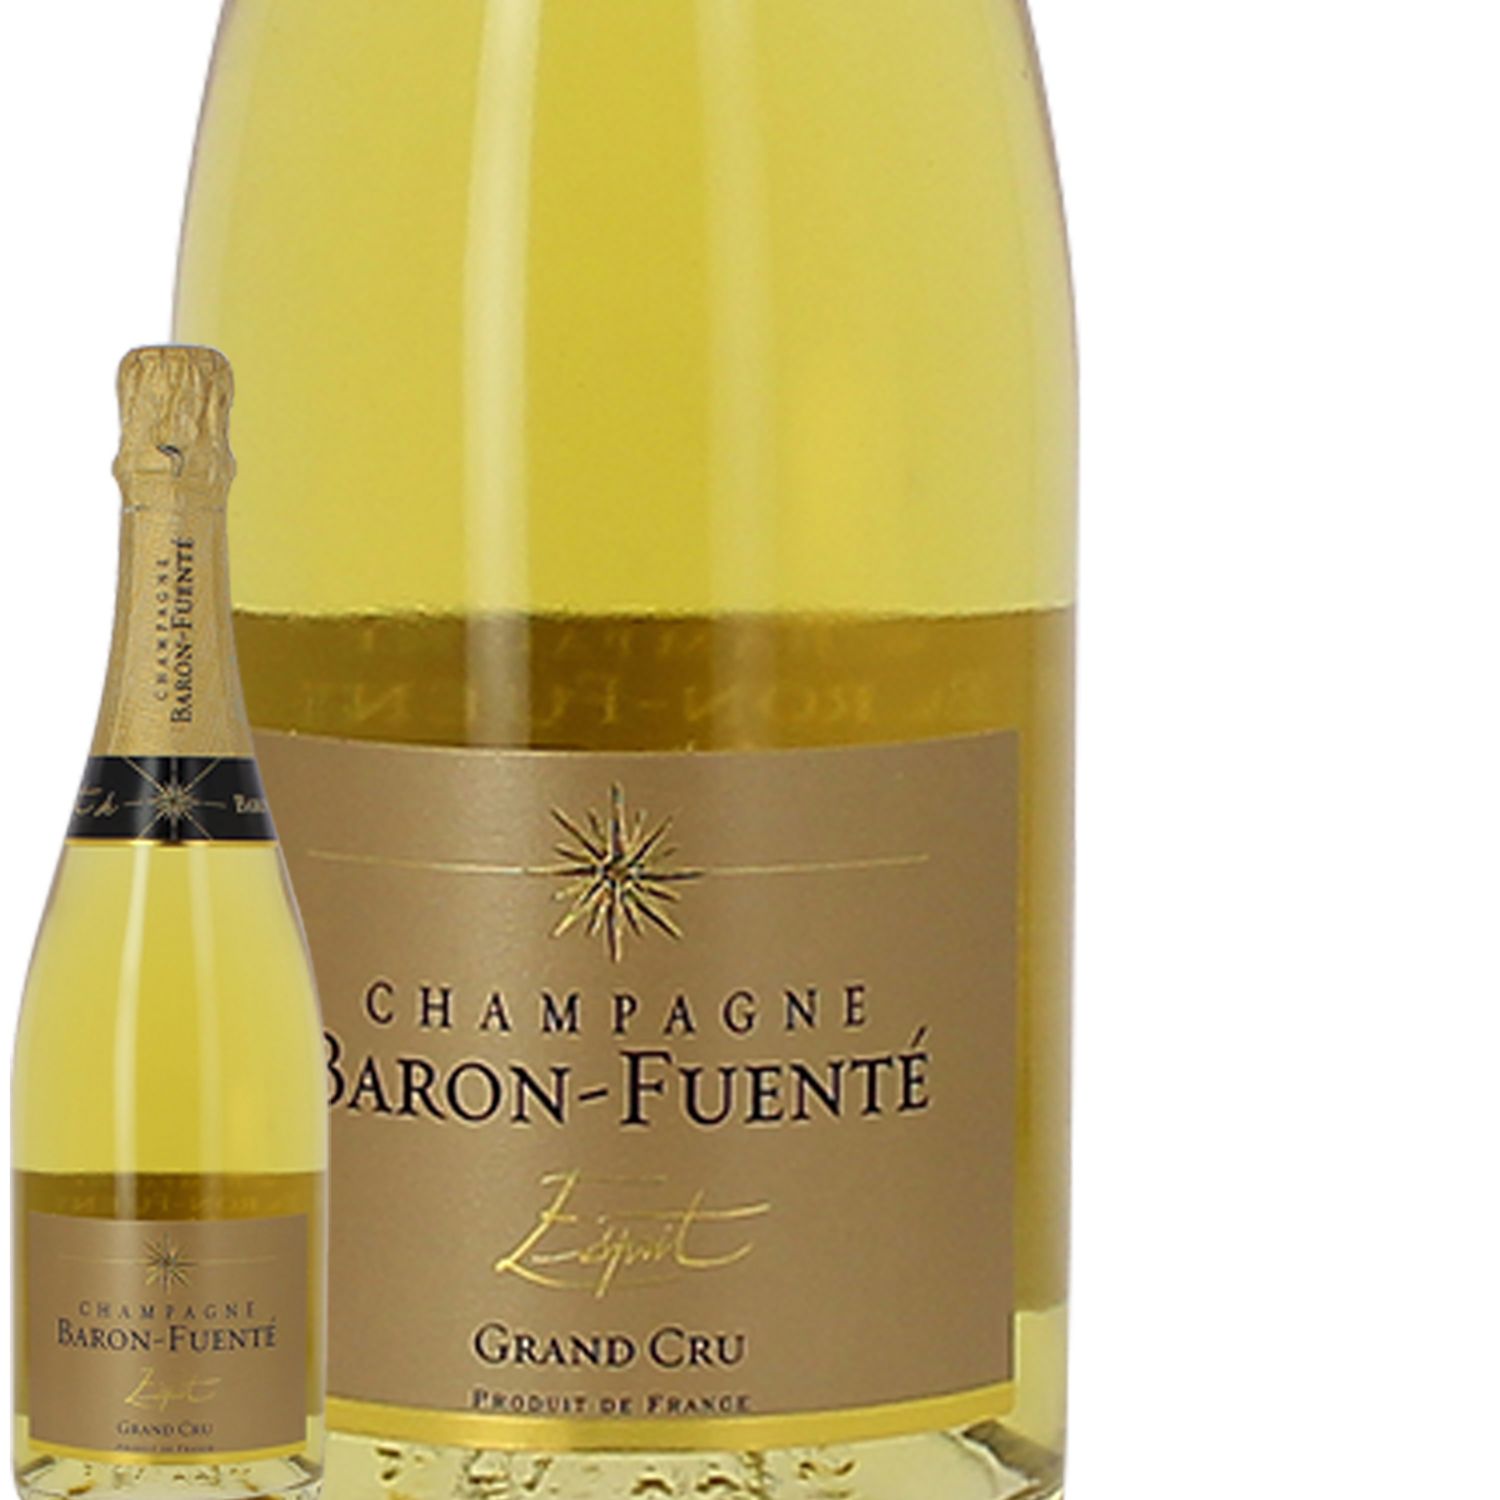 Baron fuente champagne. Шампань Гранд Валей. Baron fuente Champagne 1967.